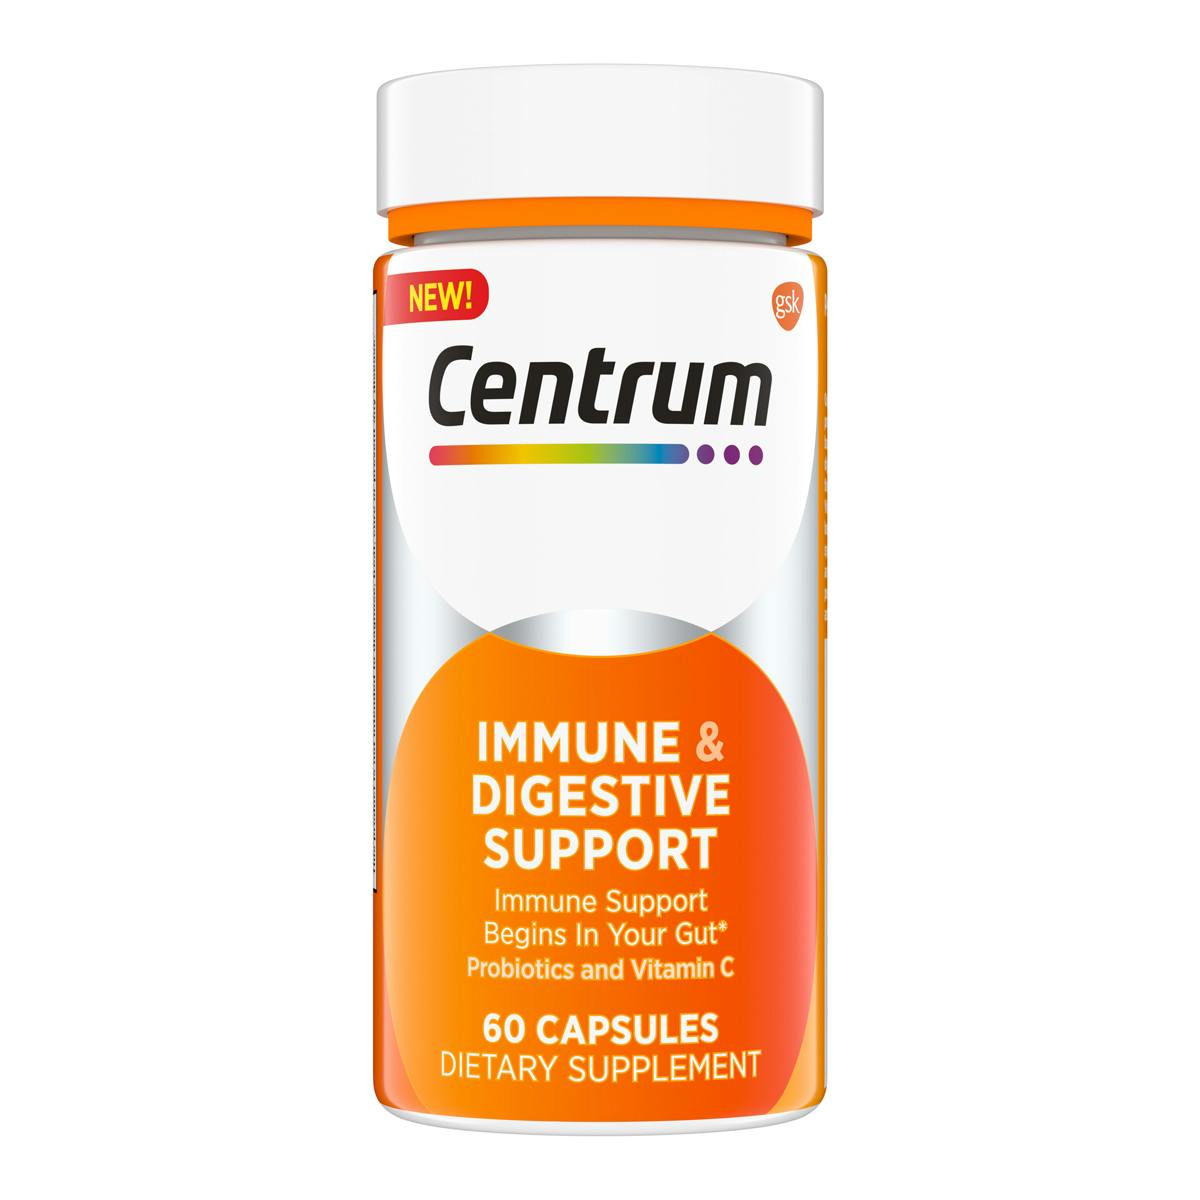 Bottle of Centrum Adult Immune & Digestive Support Capsule Supplements